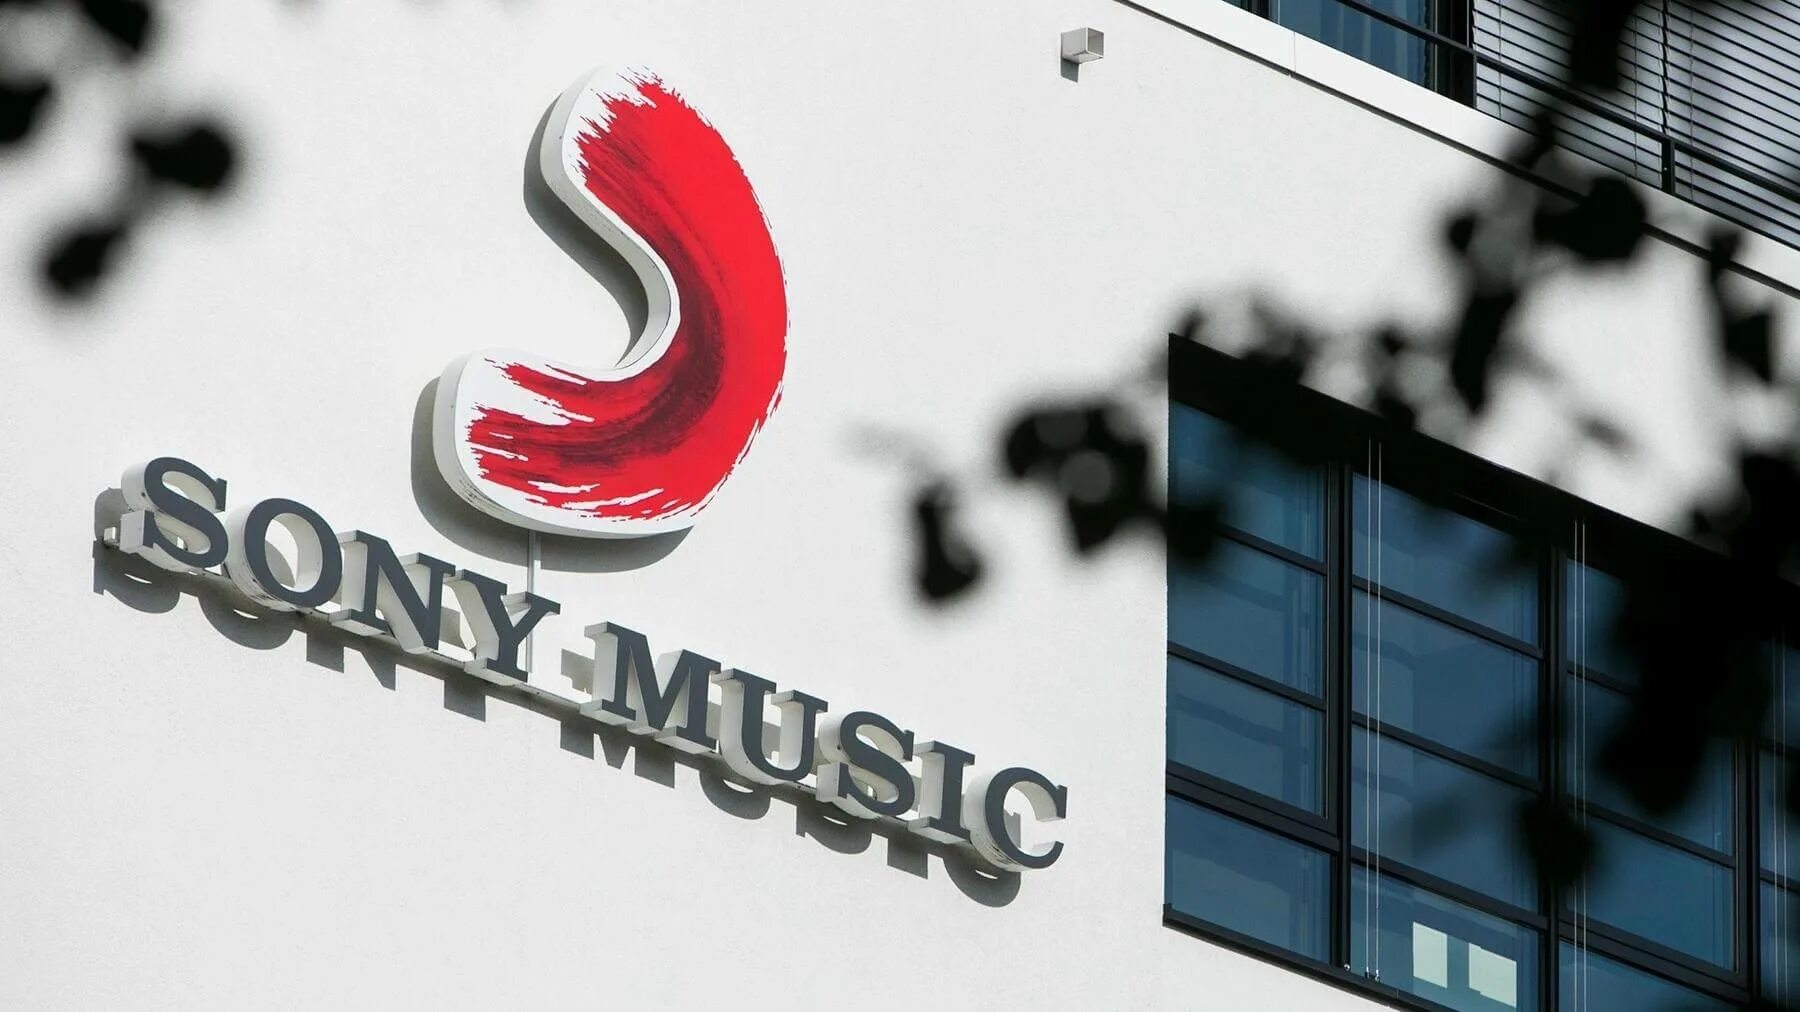 S one music. Sony Music. Sony Music Group. Sony Music Russia. Sony Music Entertainment Russia.